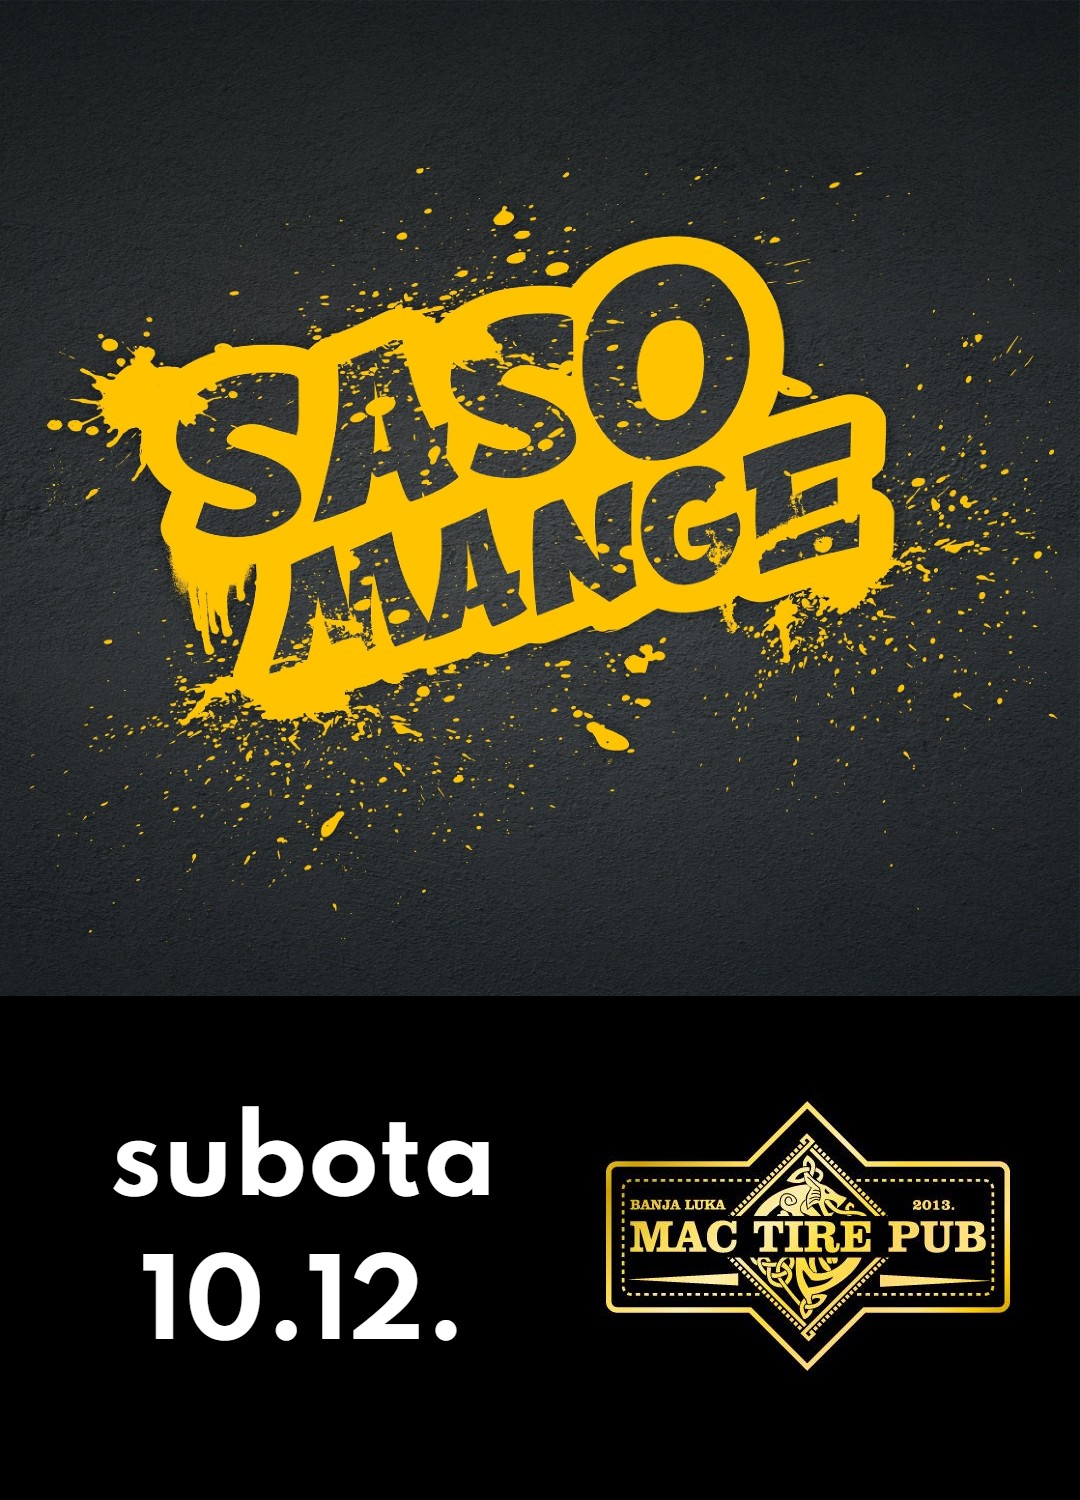 Saso Mange Mac Tire pub